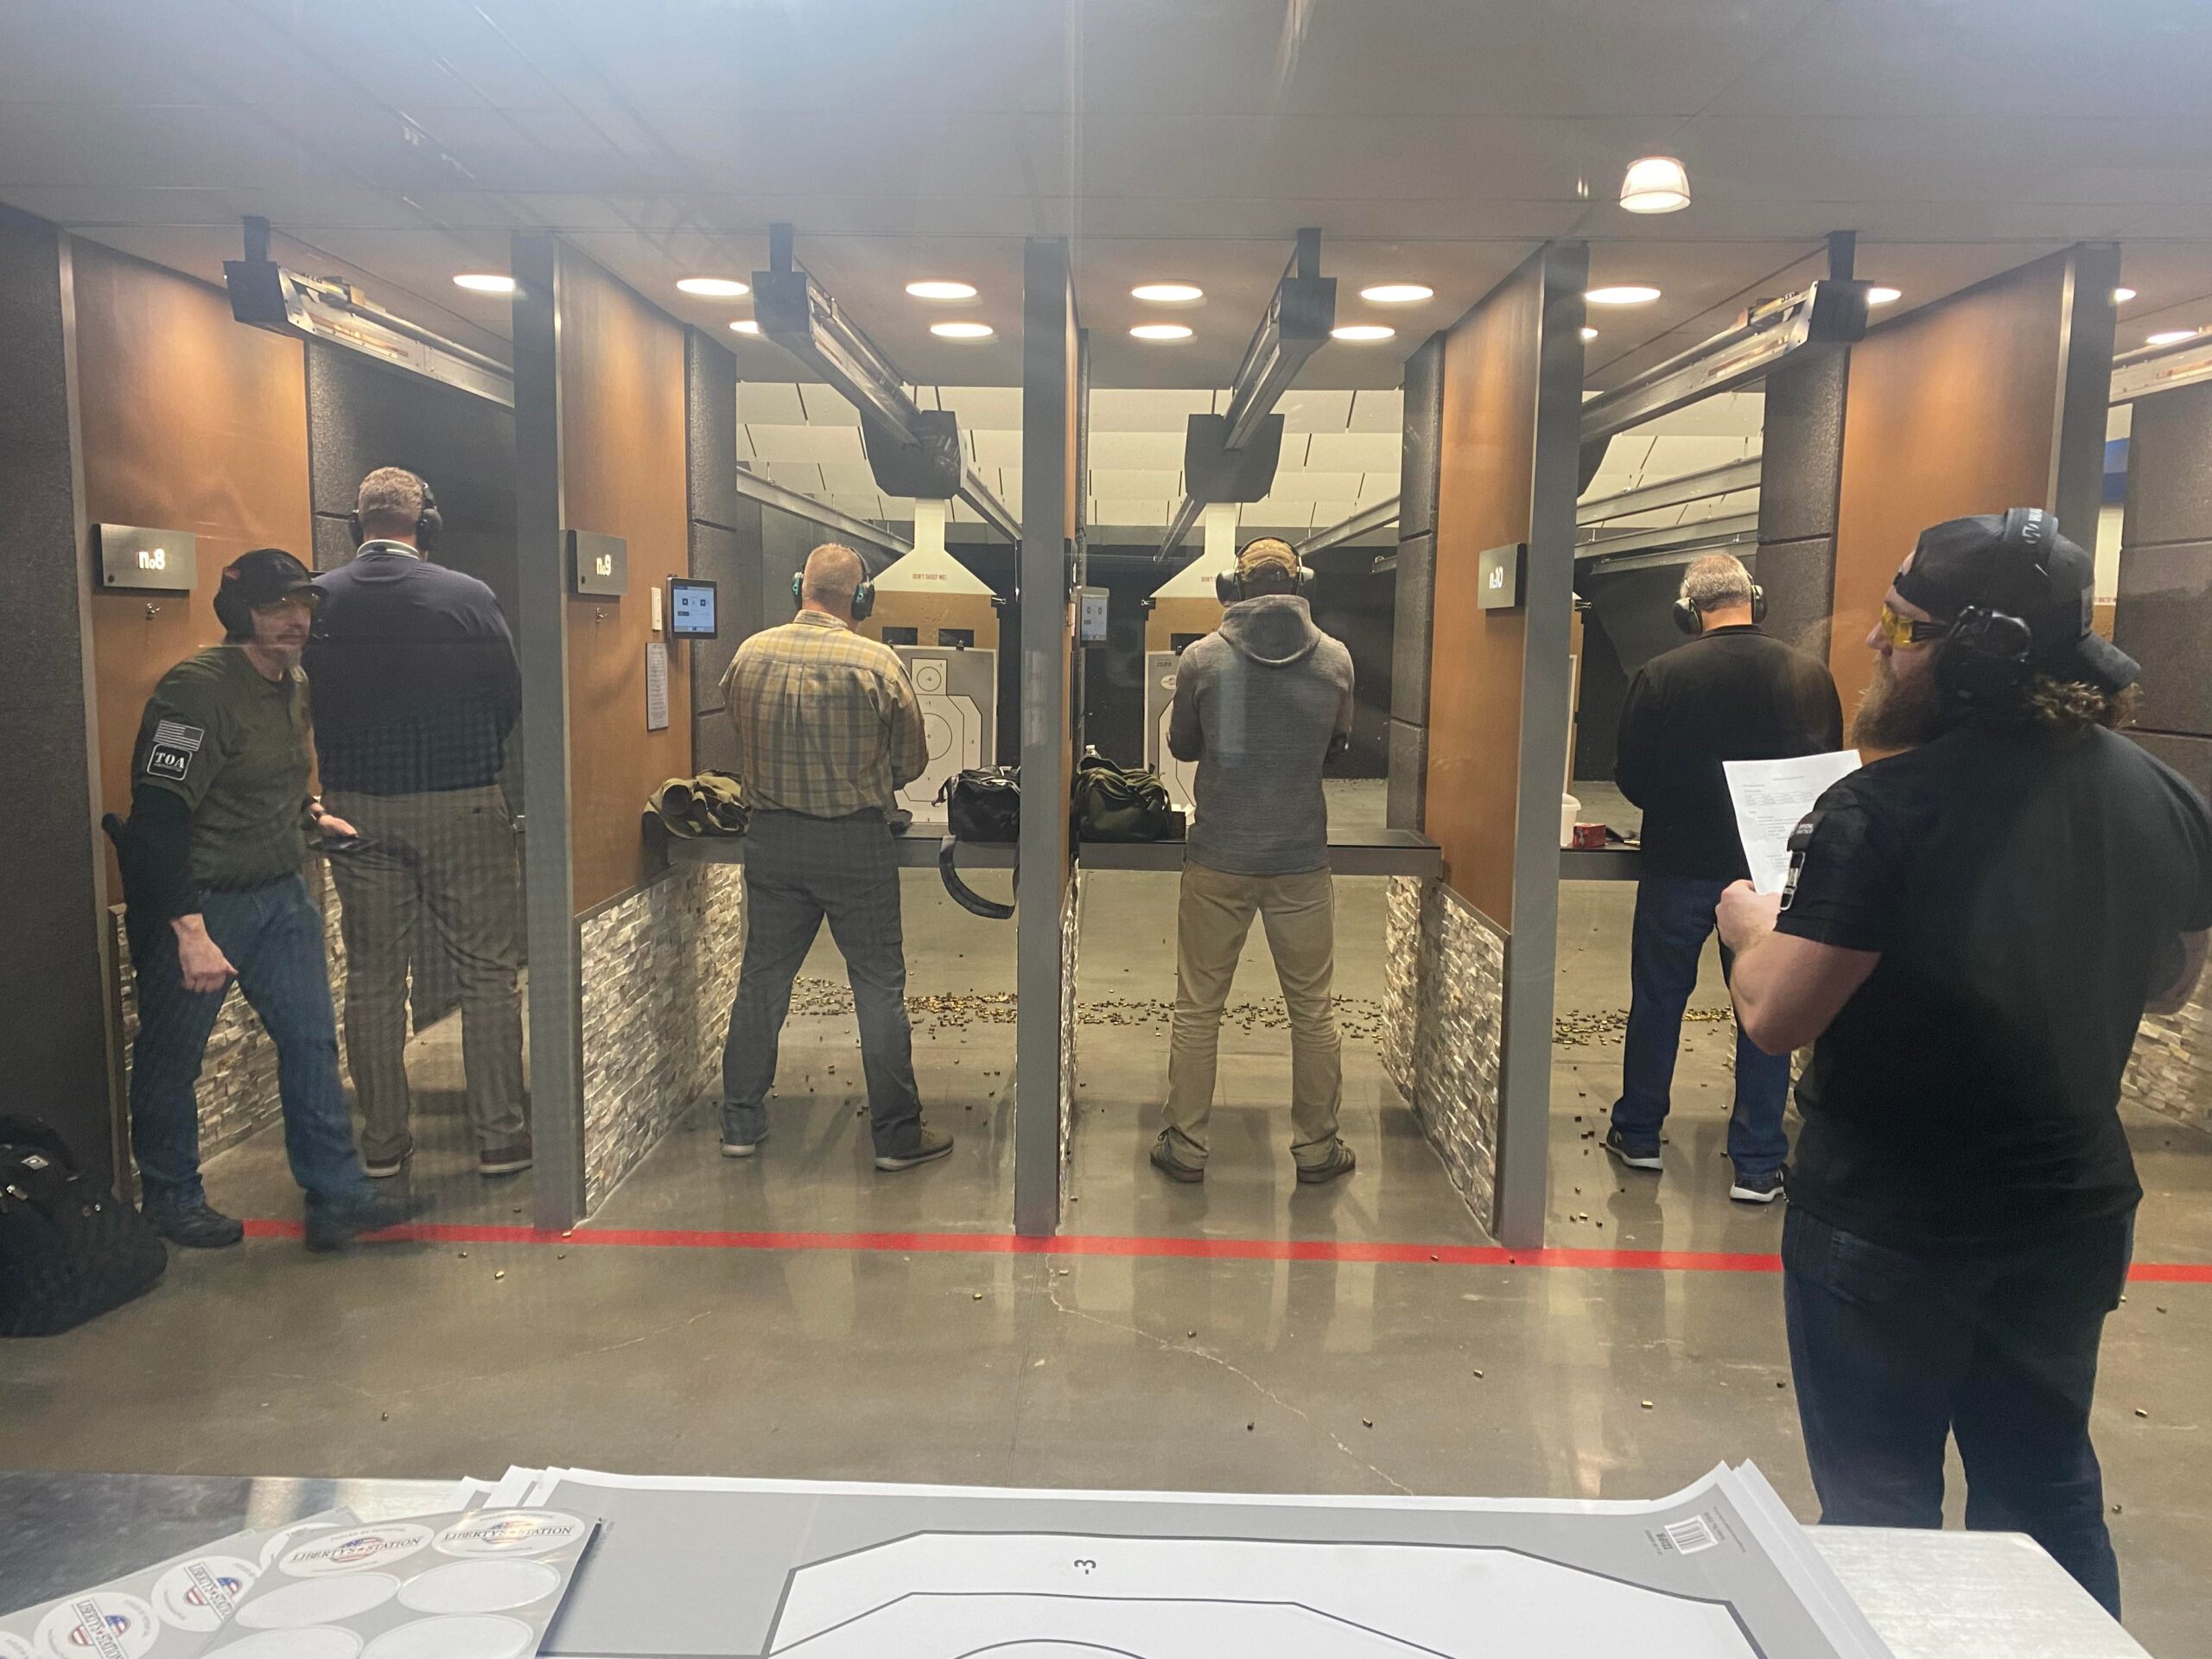 shooting range event & store - Gun Murfreesboro & Nashville - The OutPost Armory